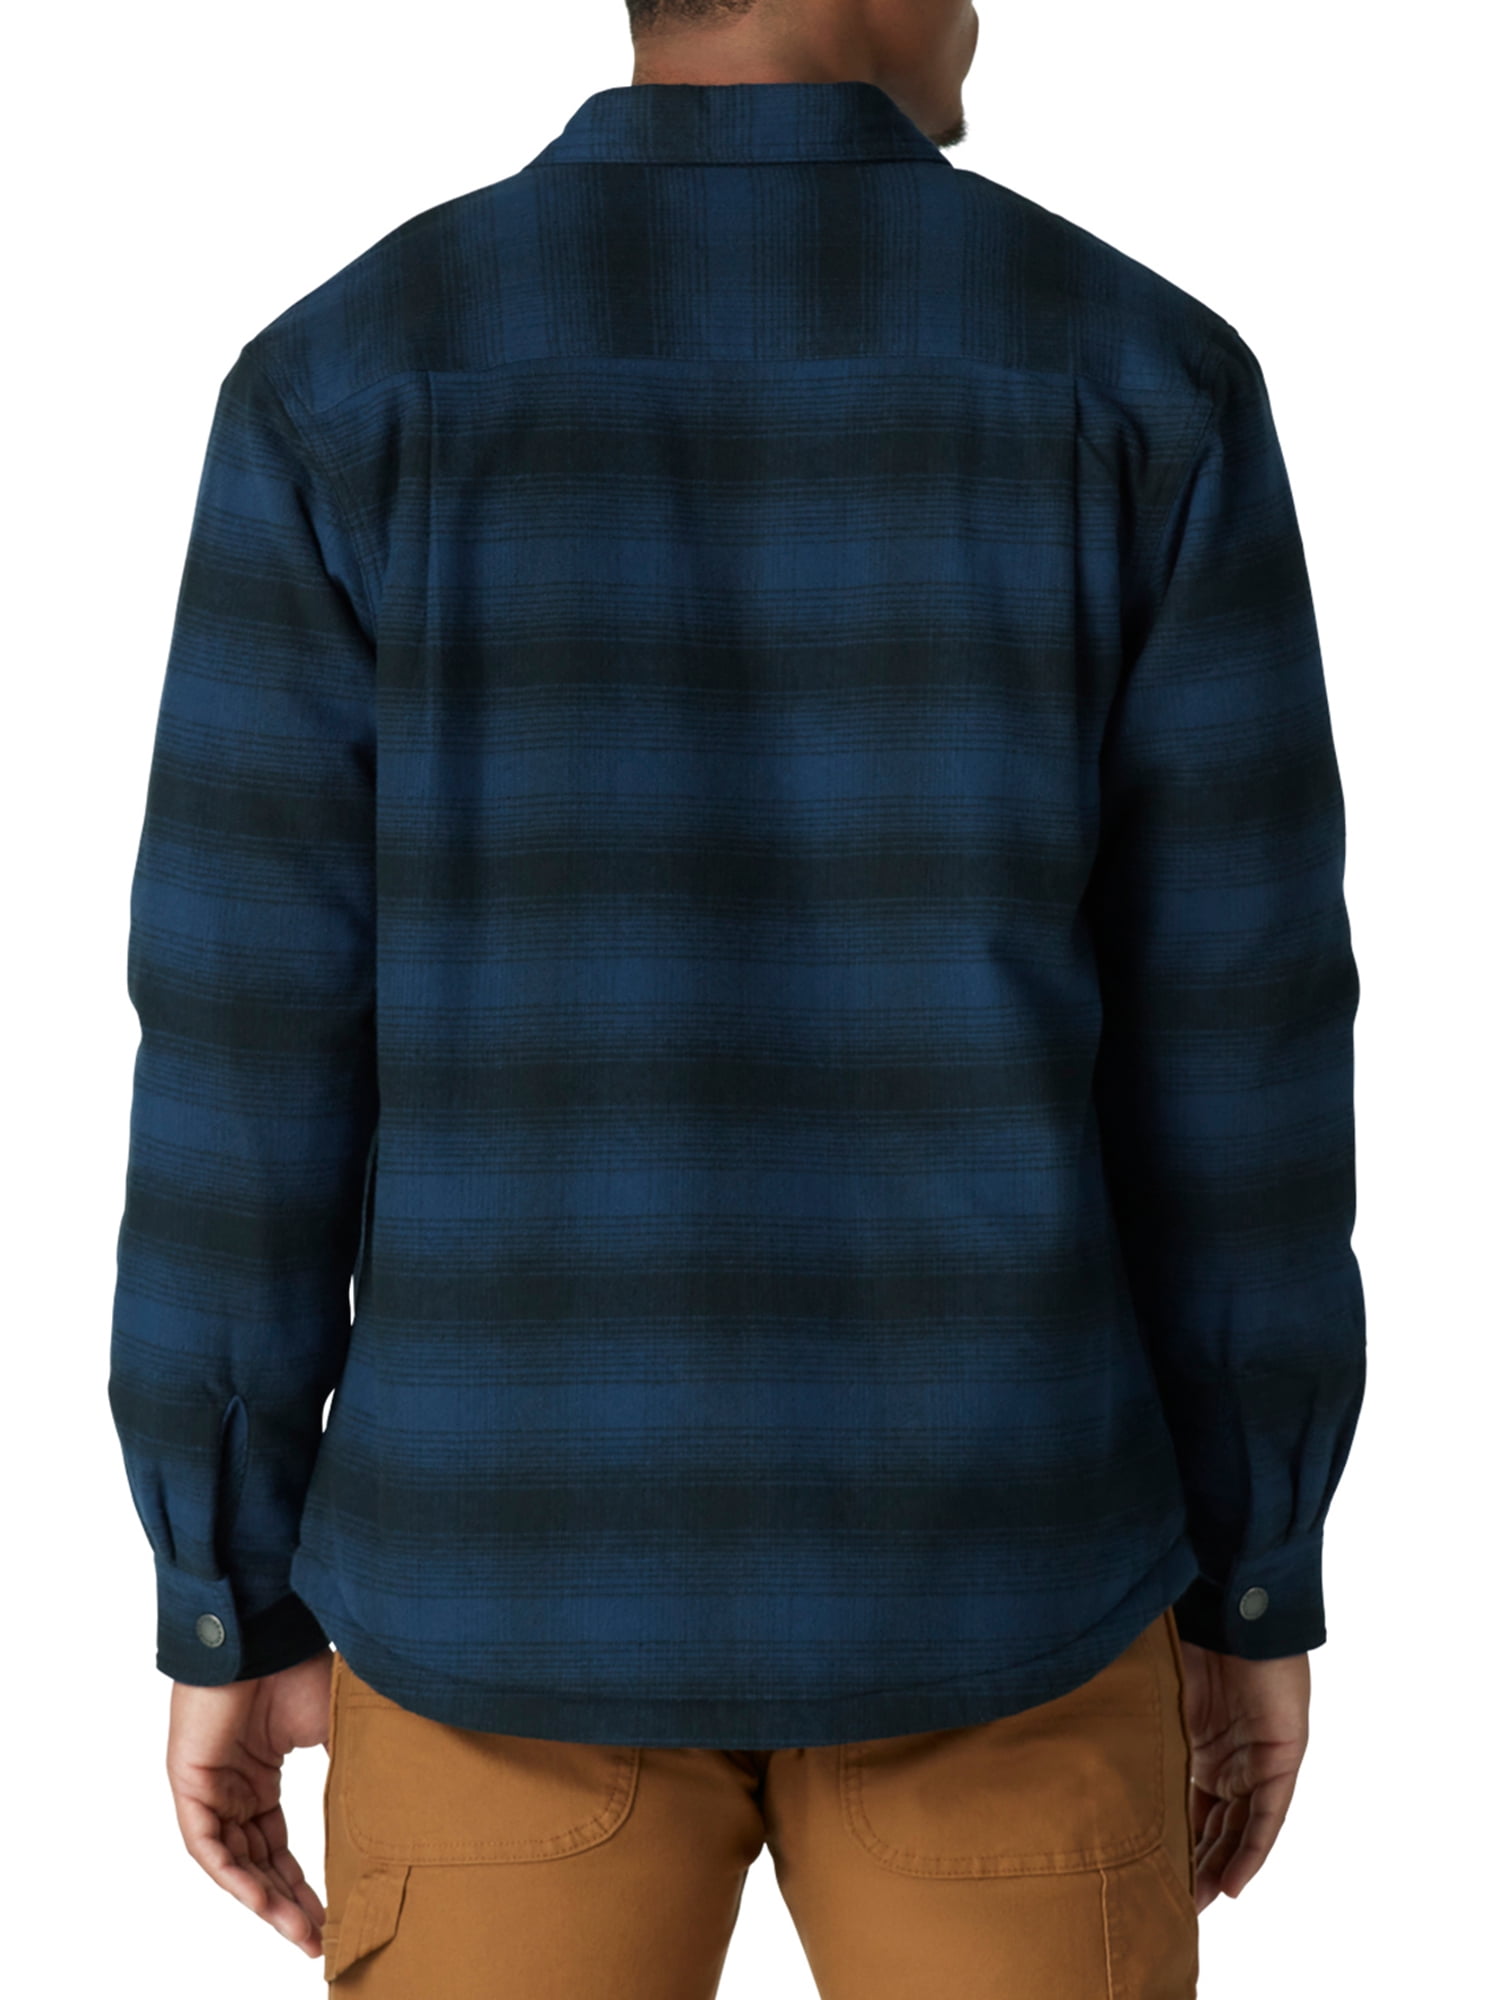 Genuine Dickies Men's HeavyWeight Flannel Shirt with Berber Lining - Walmart.com